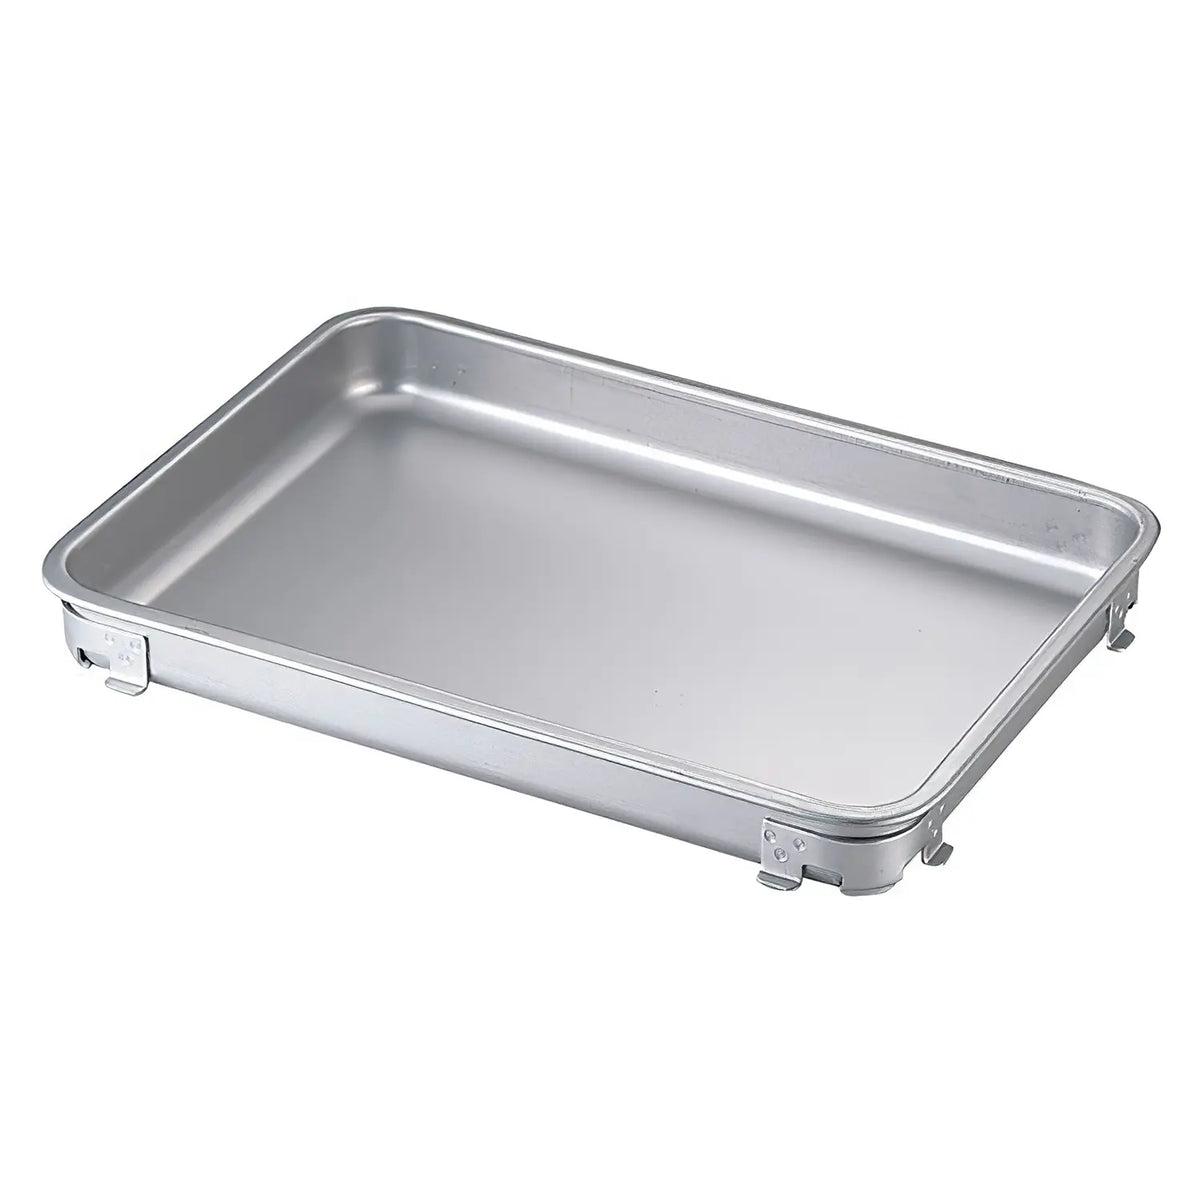 IKD ecoclean Aluminum Stackable Tray for Gyoza &amp; Perishables